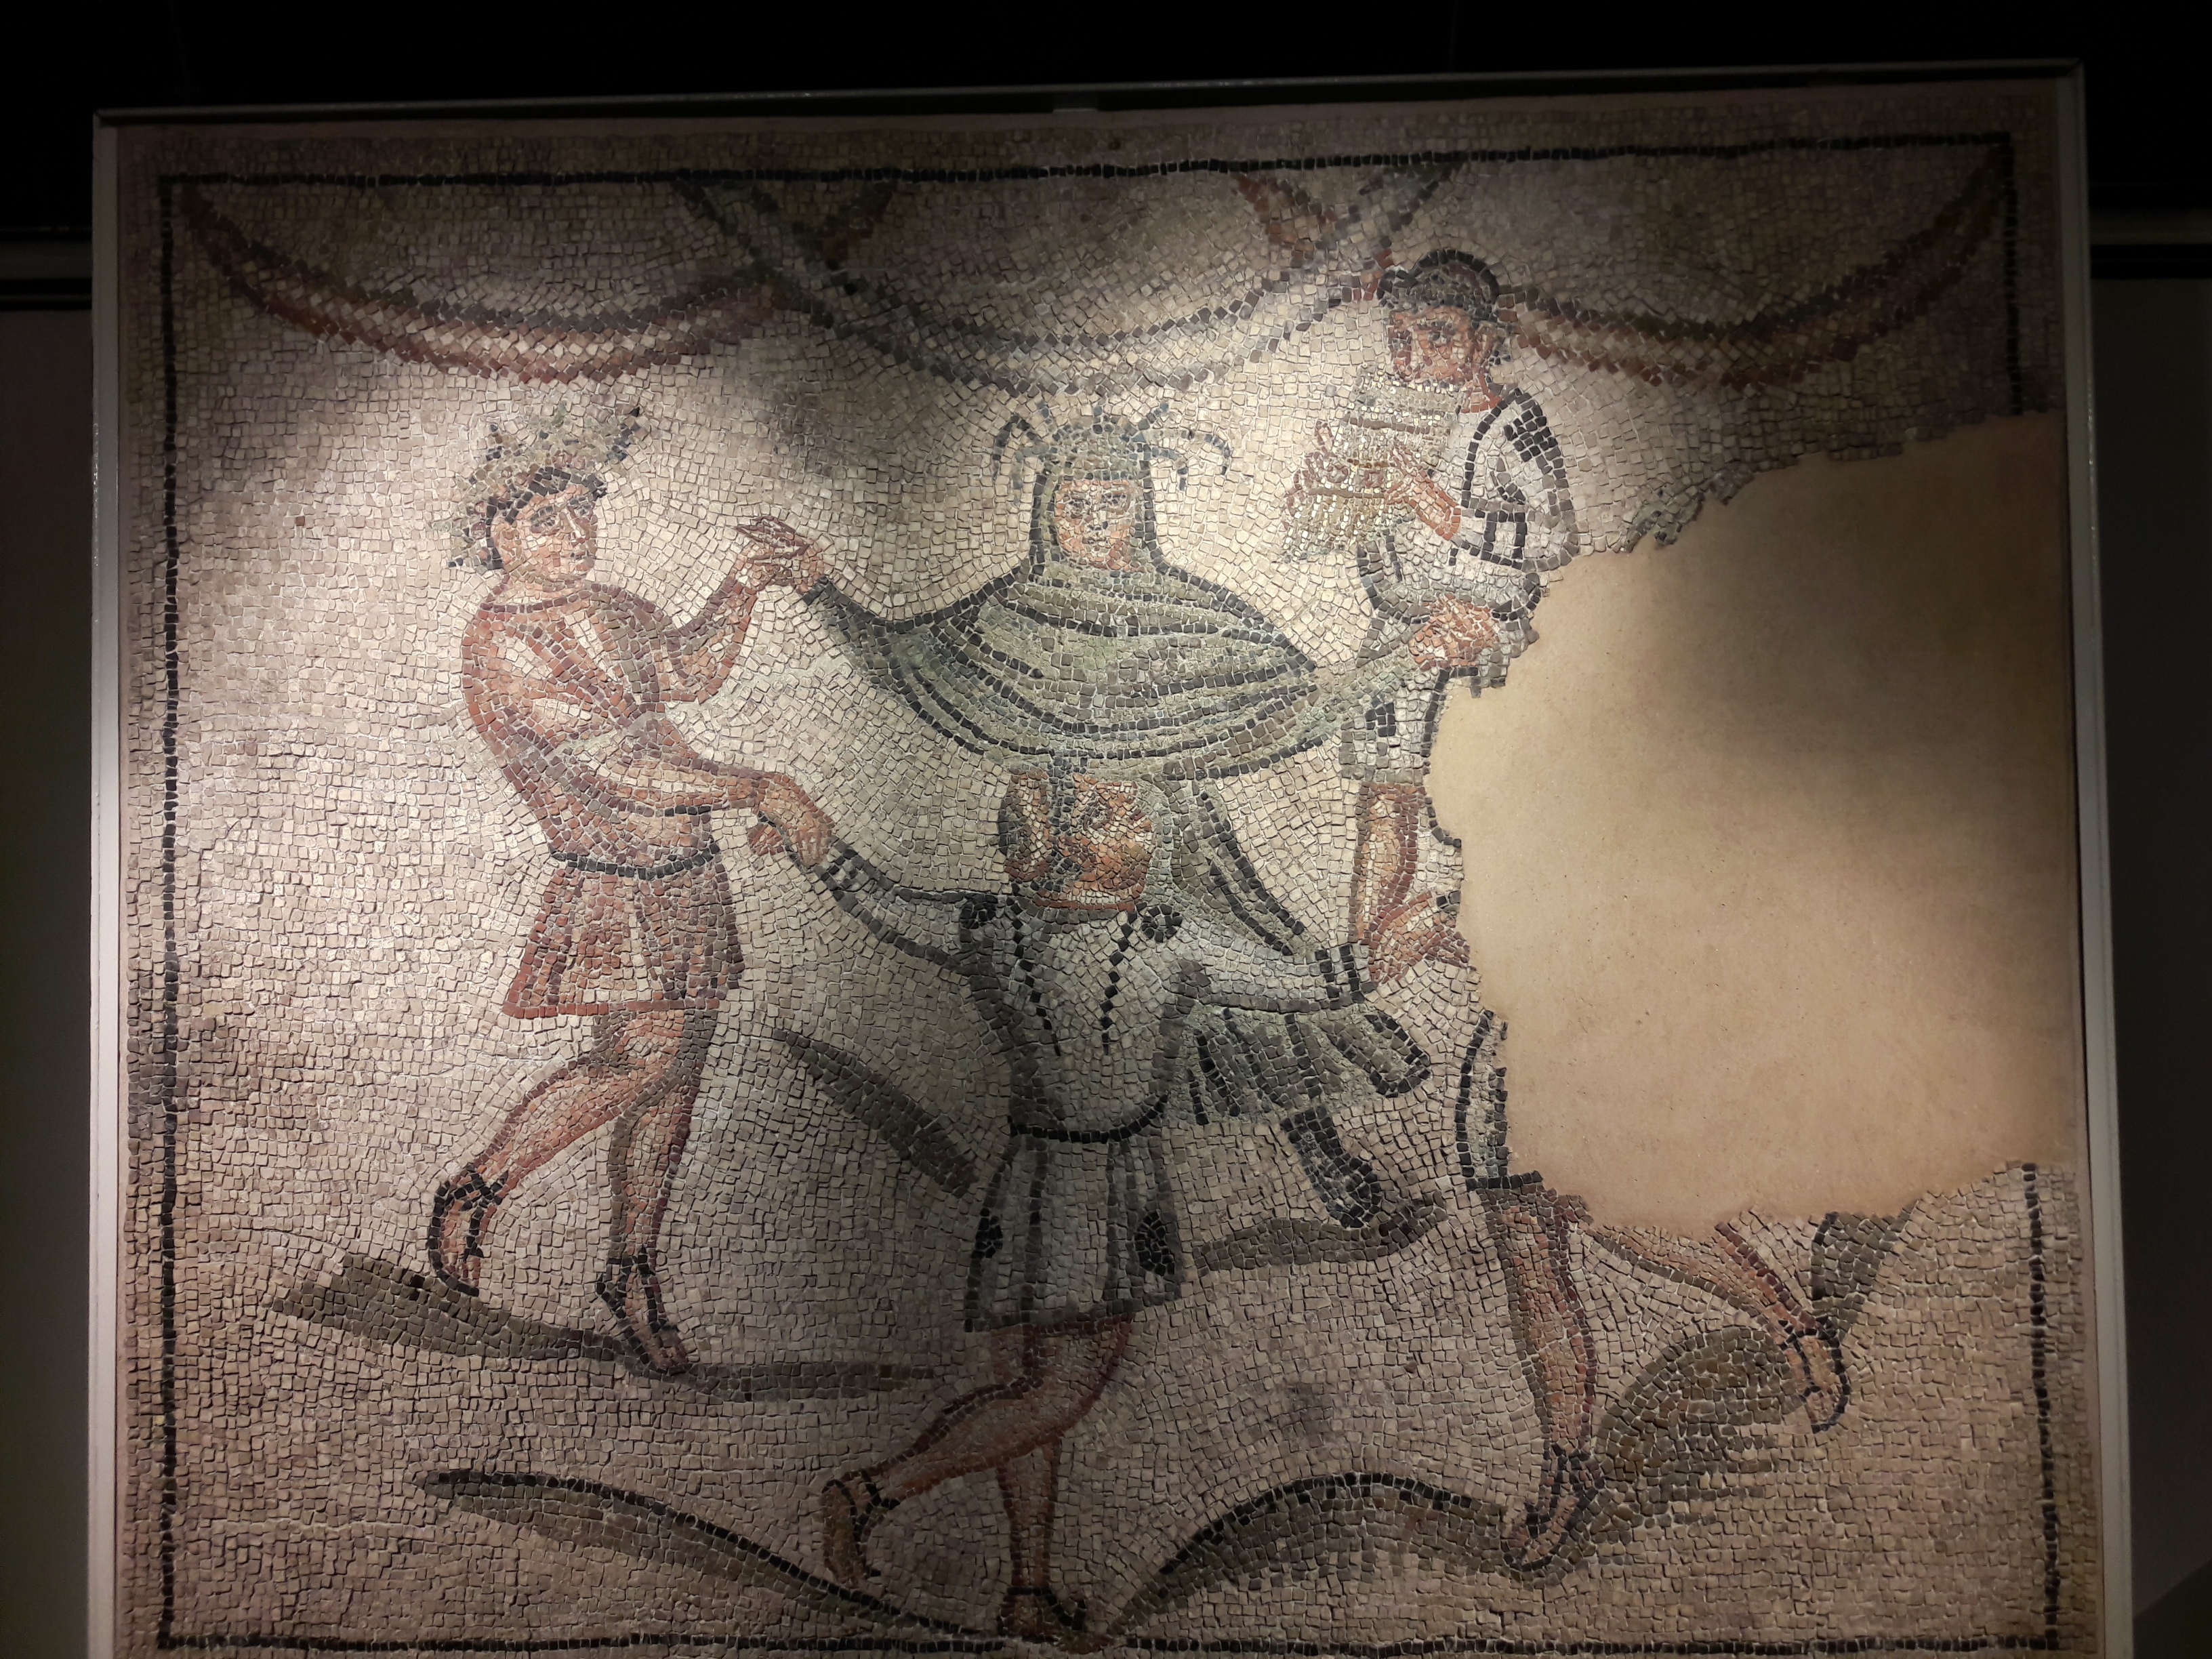 foto: https://upload.wikimedia.org/wikipedia/commons/4/46/Ravenna_-_Domus_tappeti_di_pietra_-_Mosaico_centrale_originale.jpg